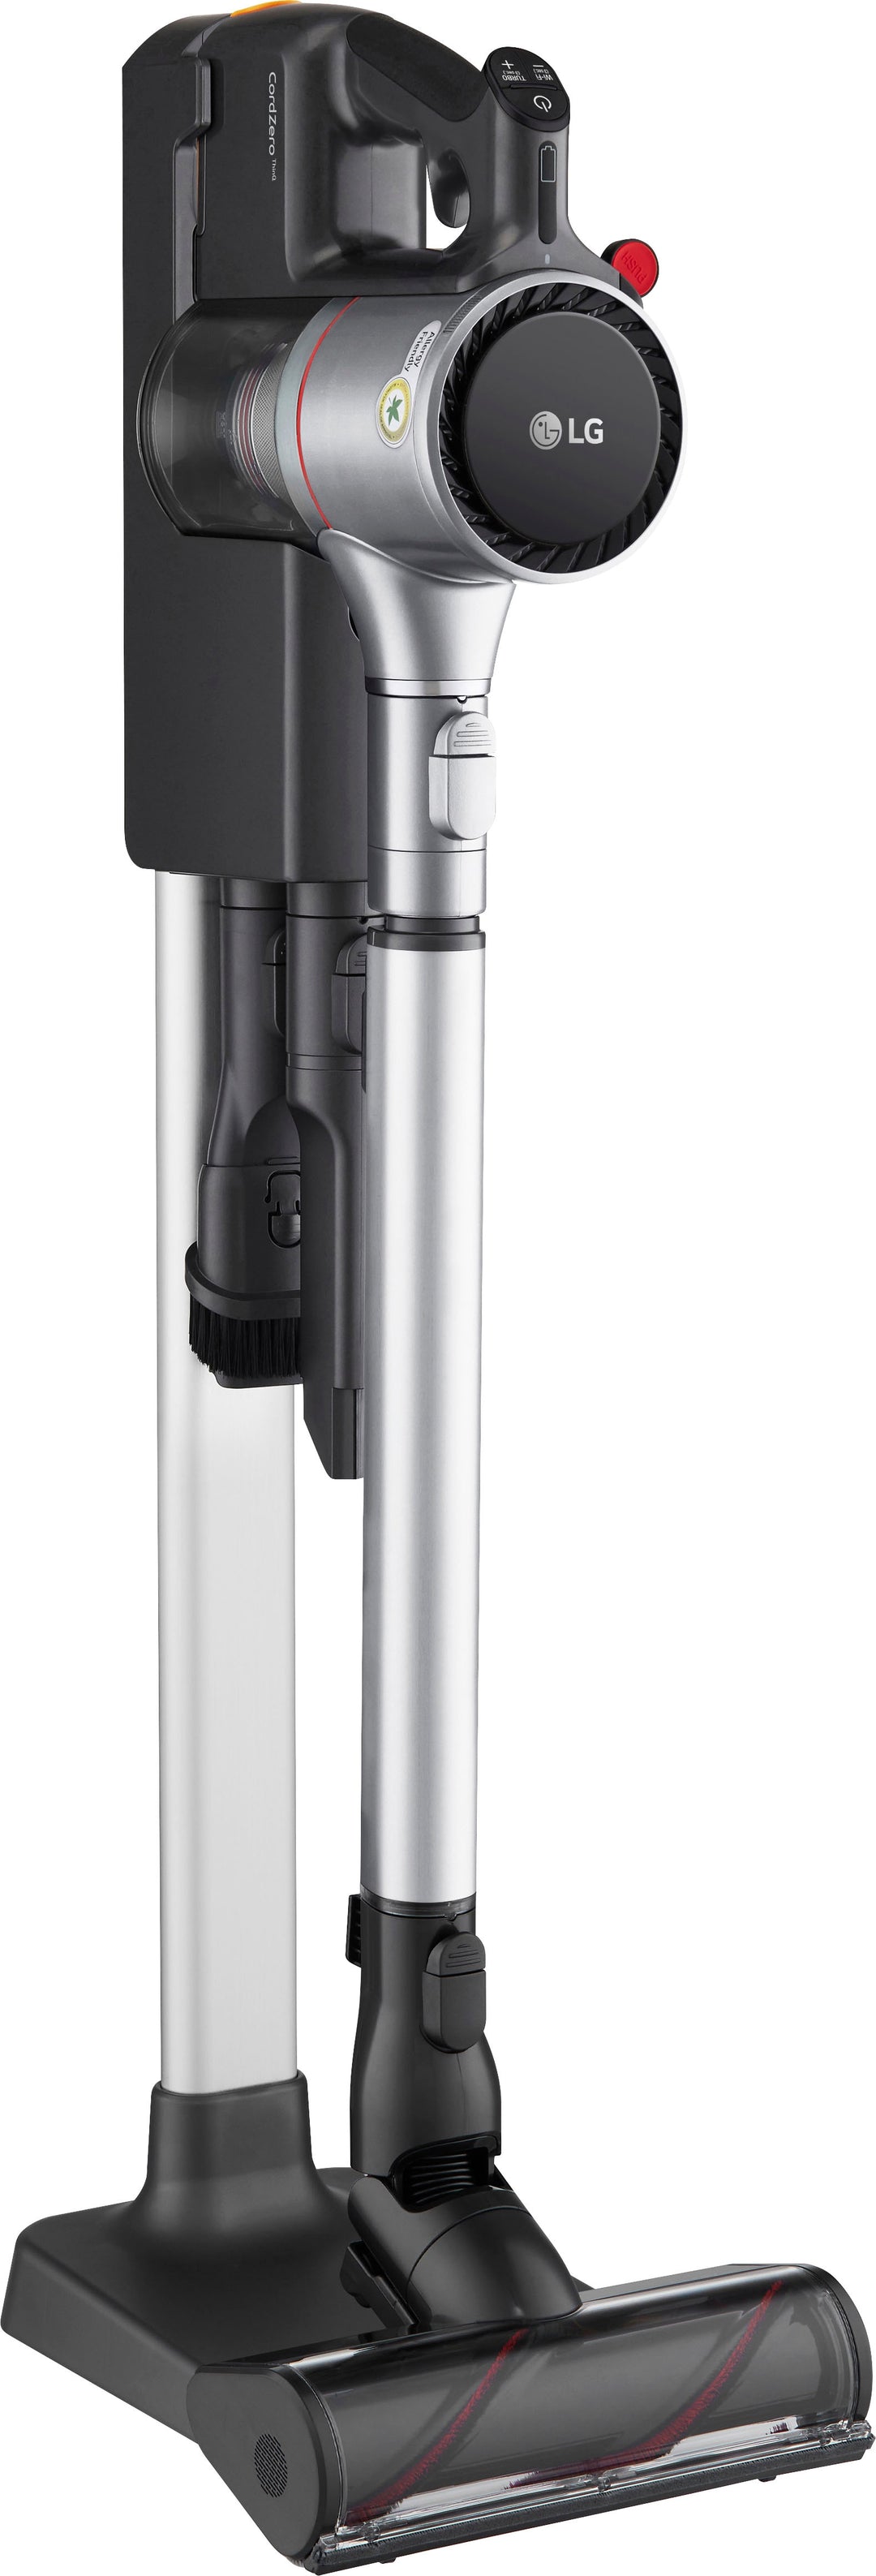 LG - CordZero Cordless Stick Vacuum with Kompressor technology - Matte Silver_7